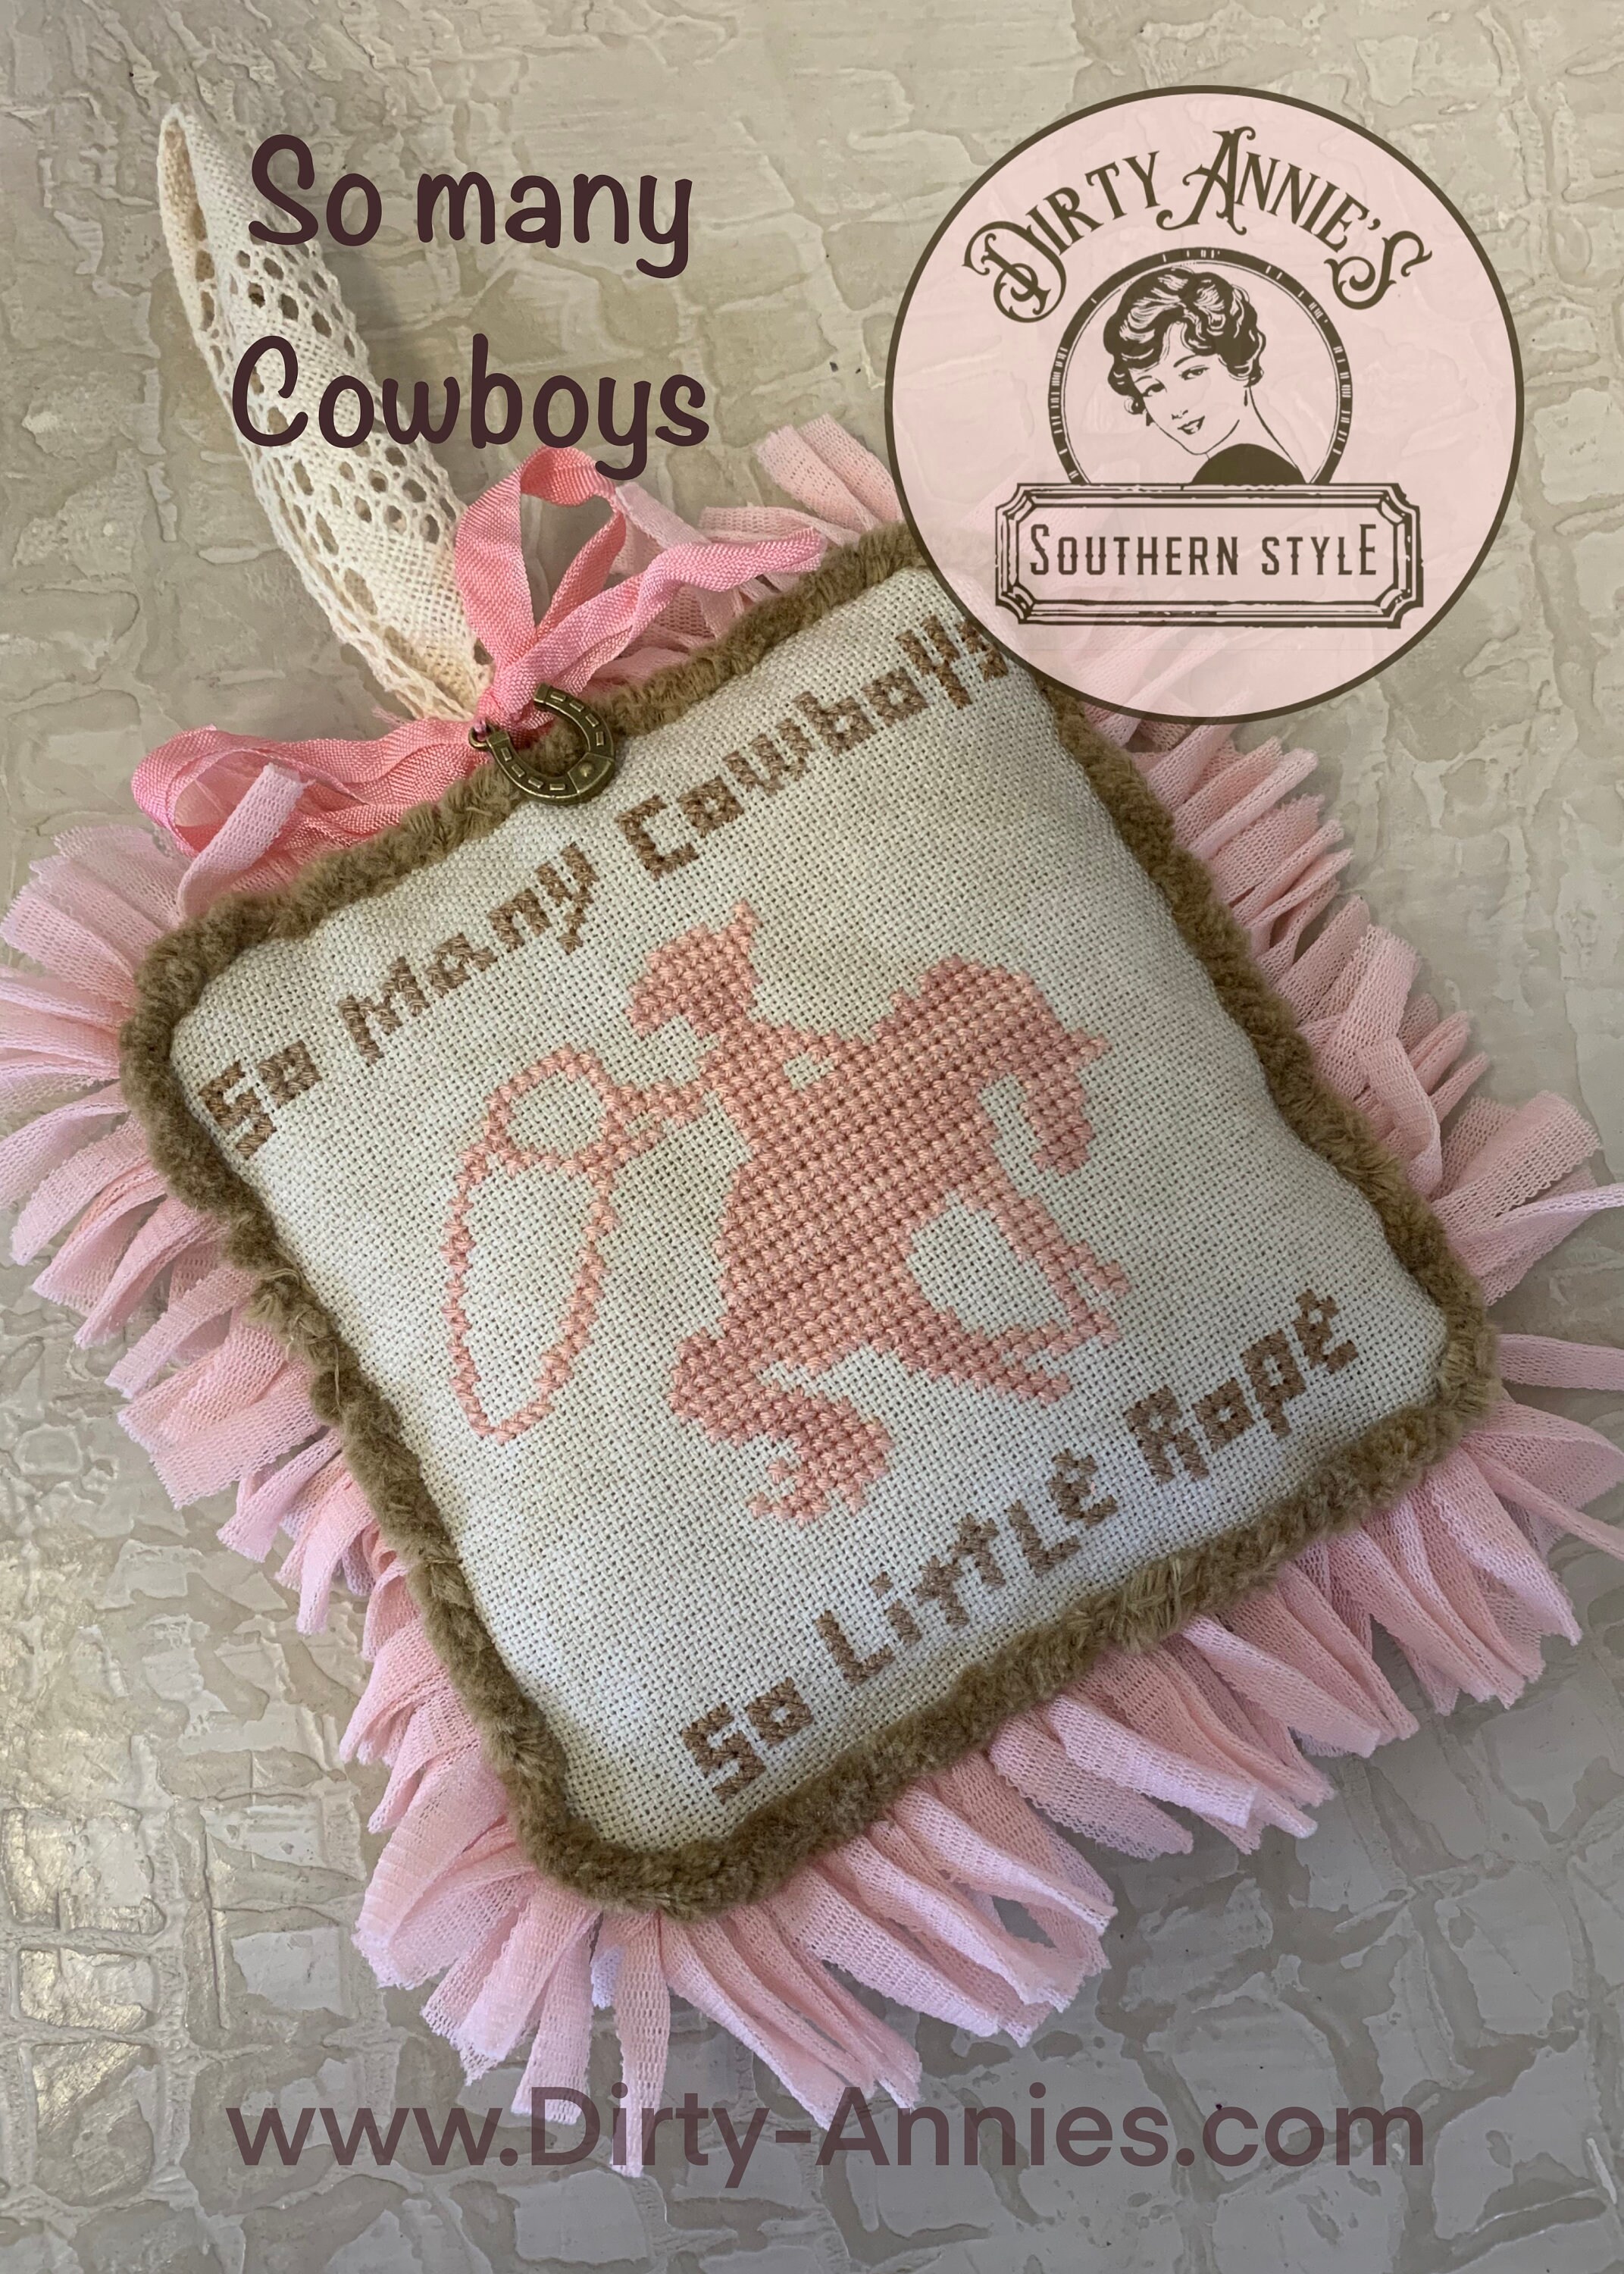 Funny Cross Stitch Kits – The Crafty Cowgirl